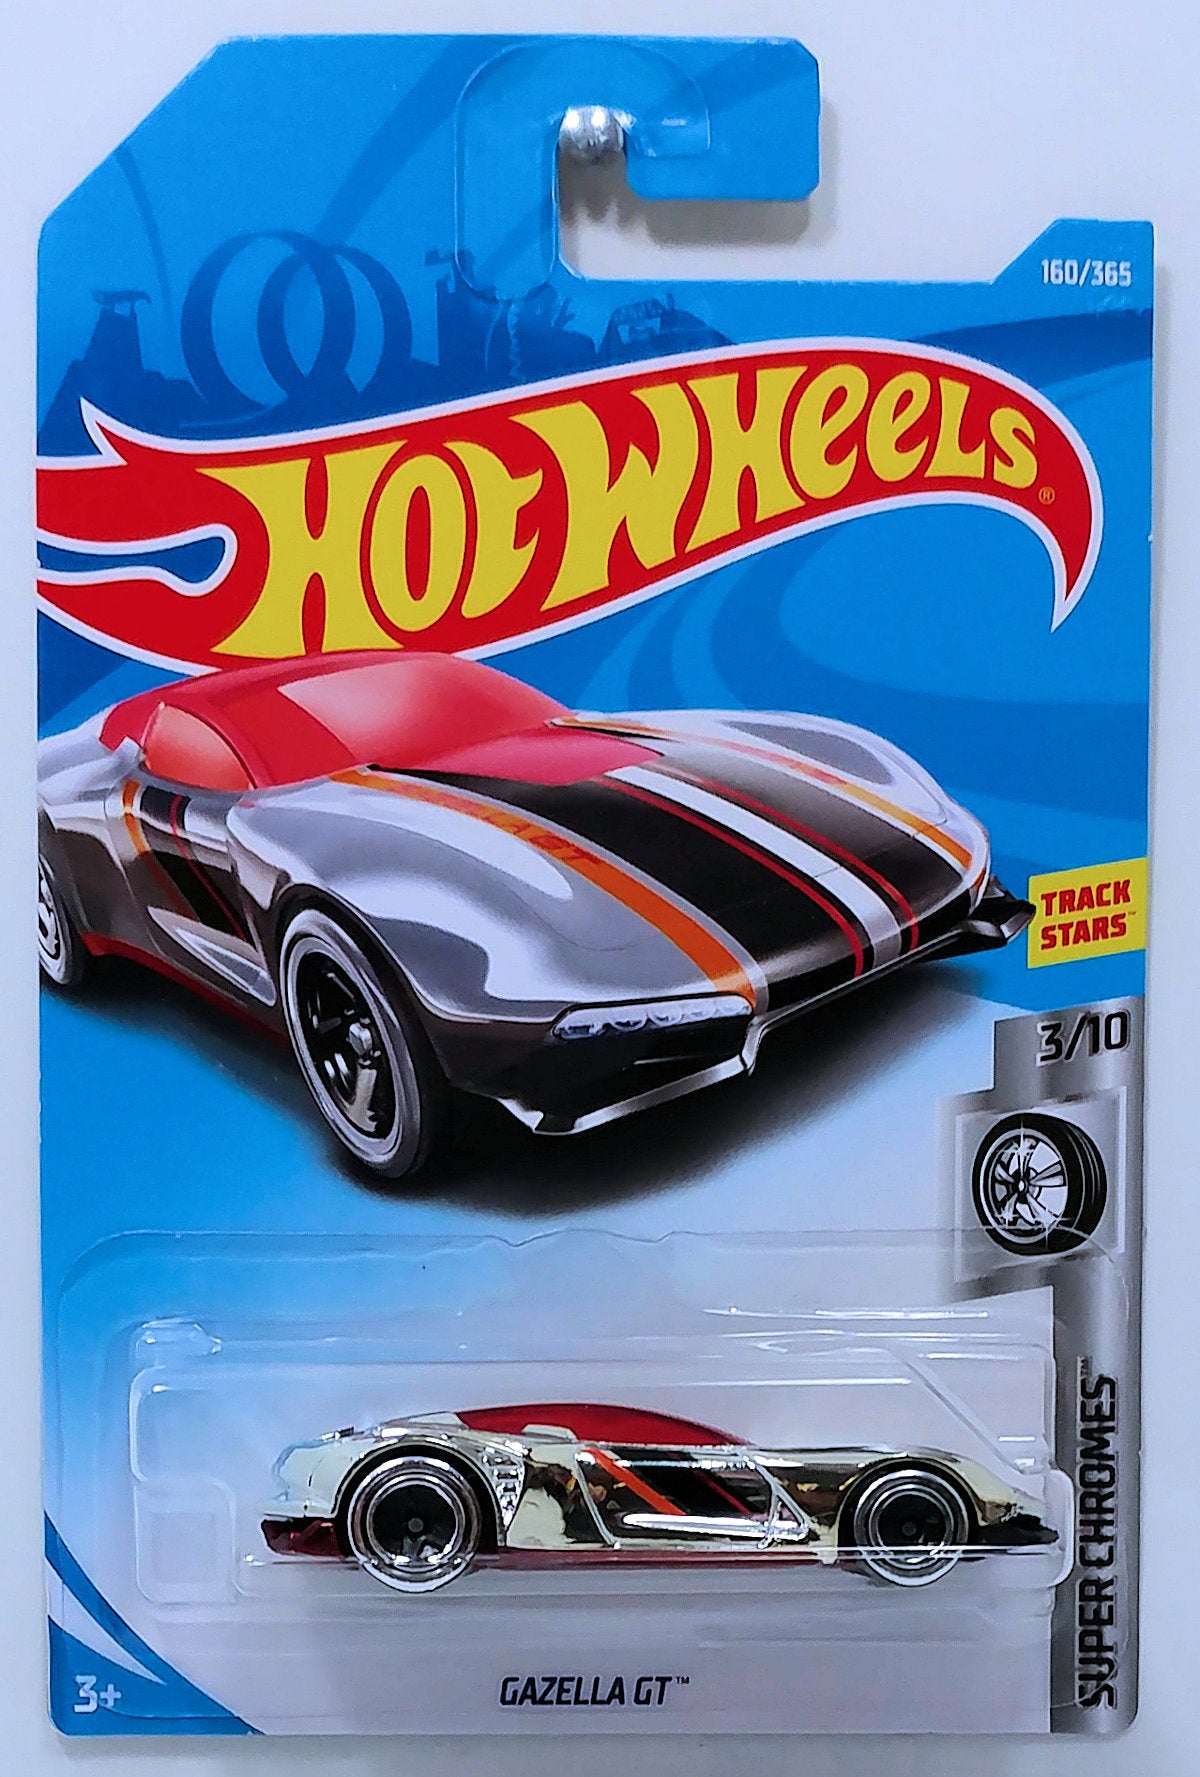 Hot Wheels 2018 - Collector # 160/365 - Super Chromes 3/10 - Gazella GT - Chrome - International Card